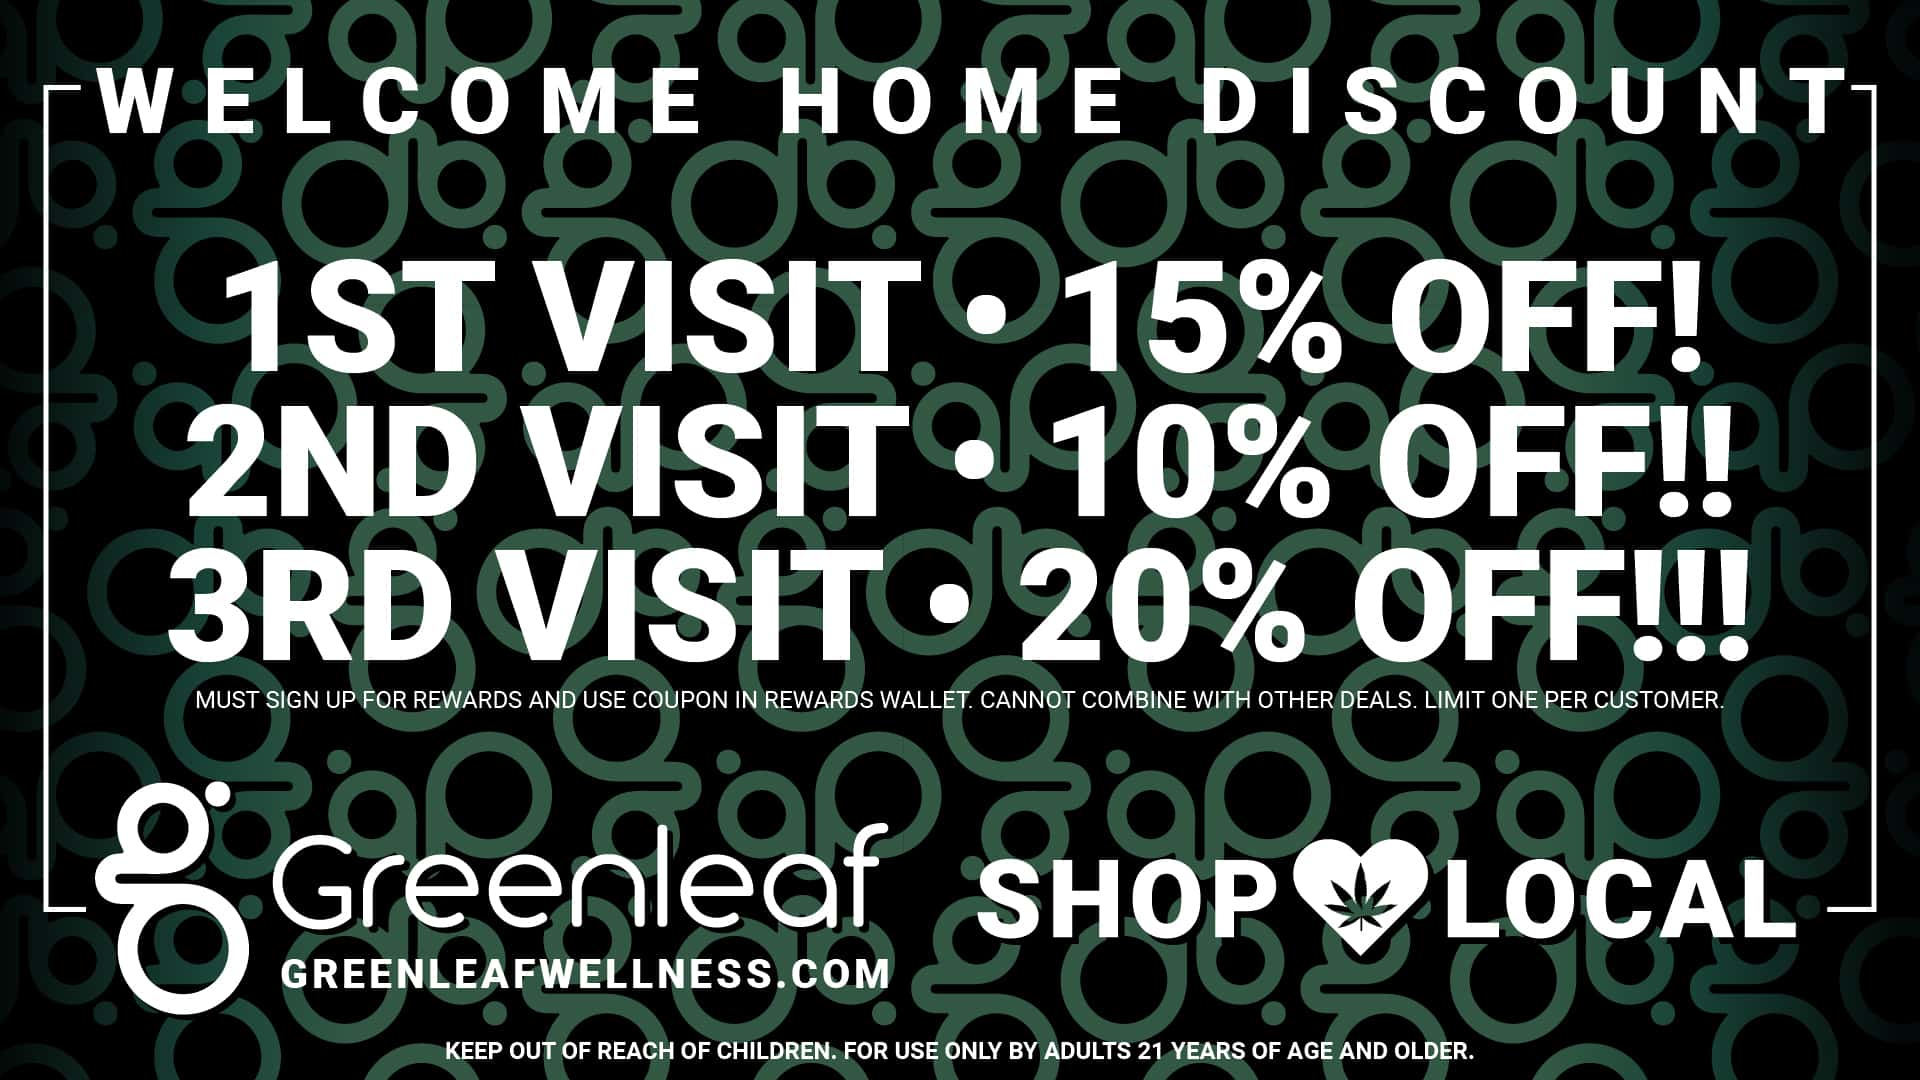 Greenleaf 1st time buyer discount details. First visit gets 15% off, second visit gets 10% off, 3rd visit gets 20% off.